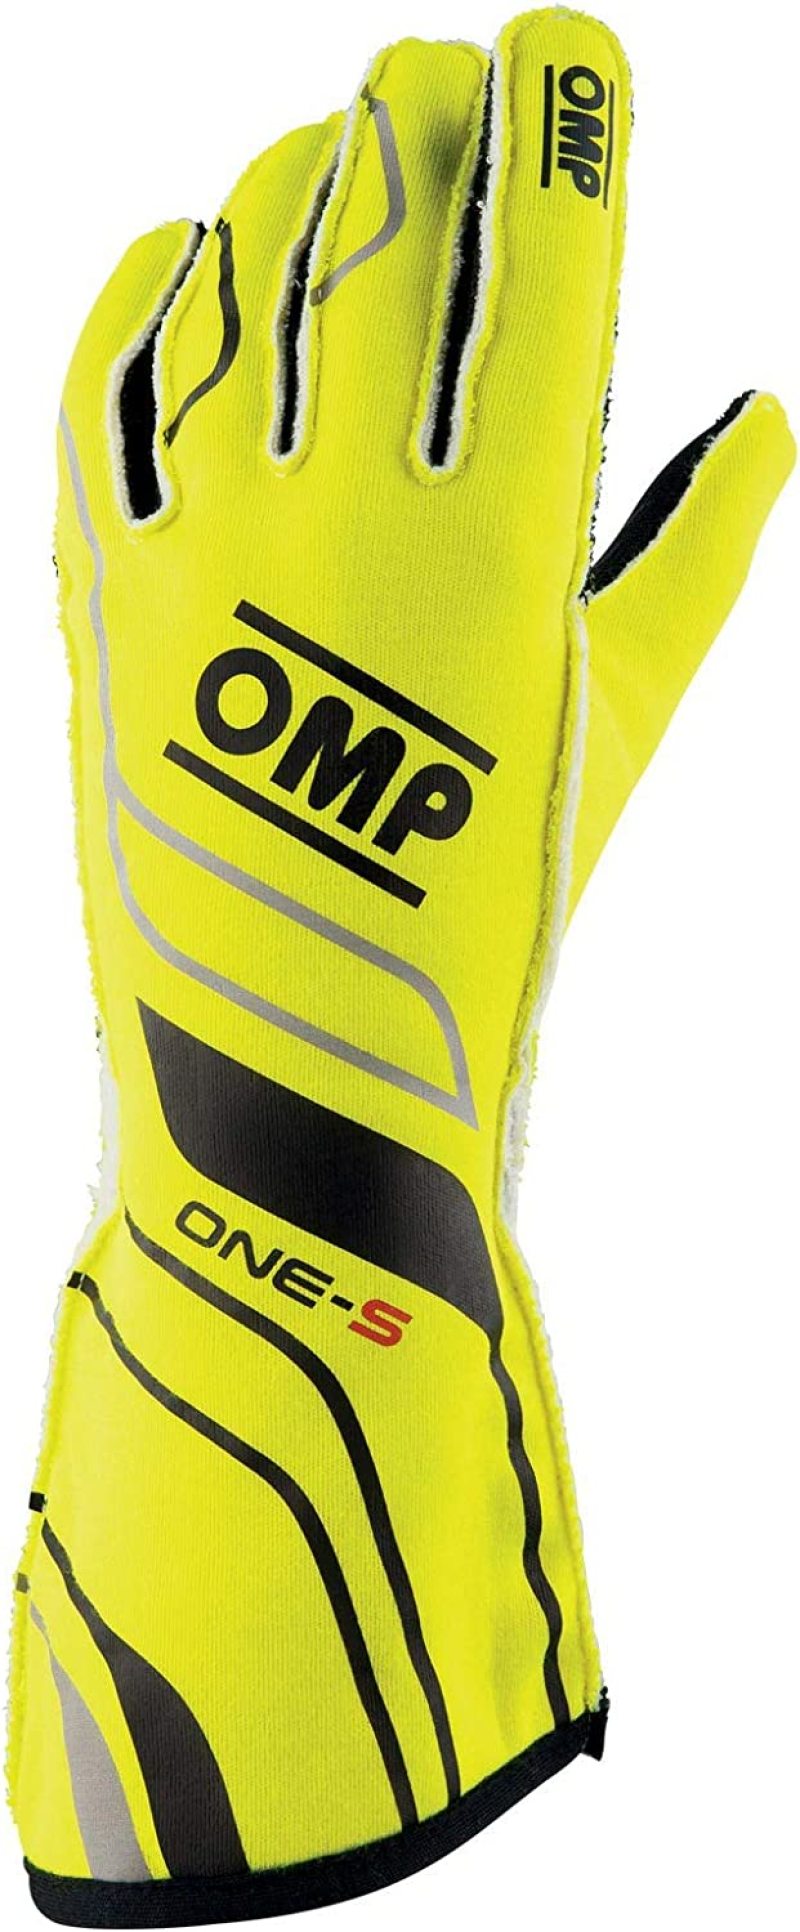 OMP One-S Gloves Fluorescent Yellow - Size XL Fia 8556-2018 - IB0-0770-A01-099-XL